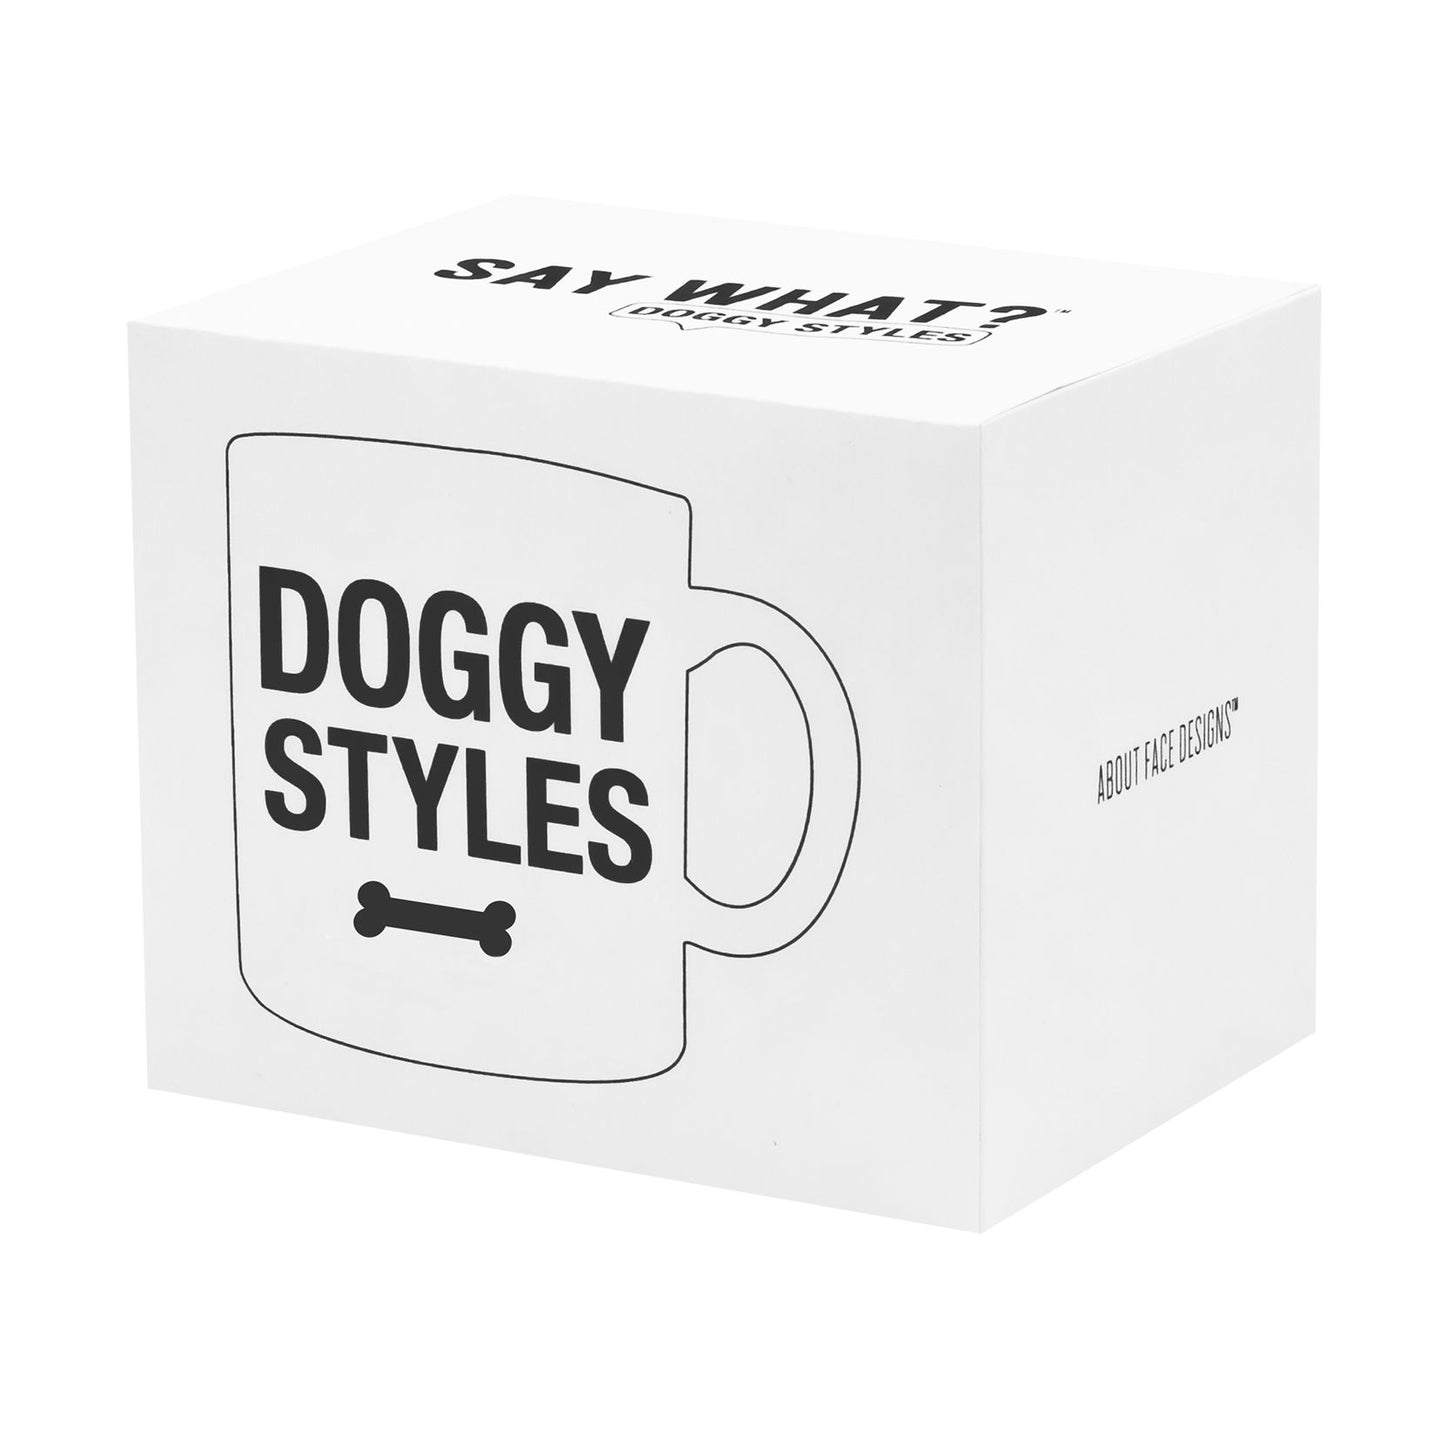 Stay at Home Dog Mom Stoneware Mug | Coffee Tea Mug | 20oz